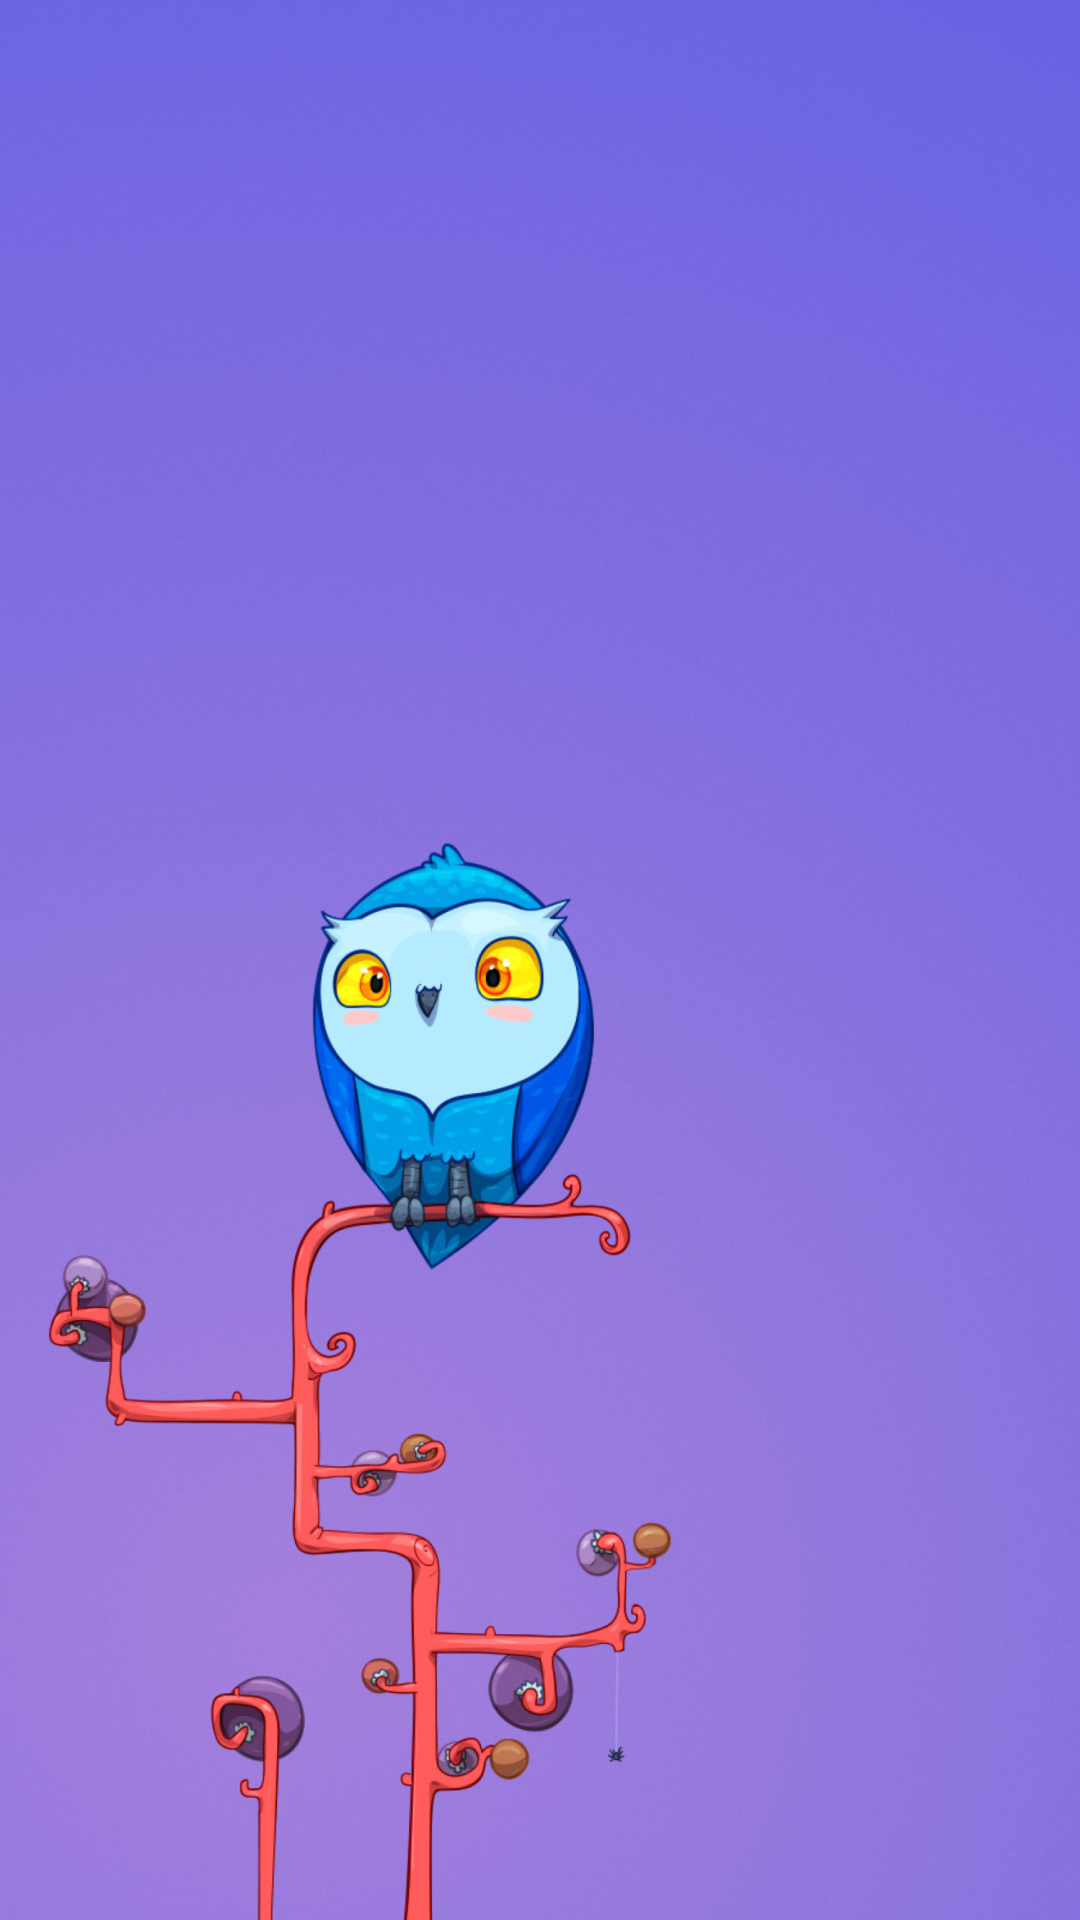 Cute Blue Owl wallpaper 1080x1920